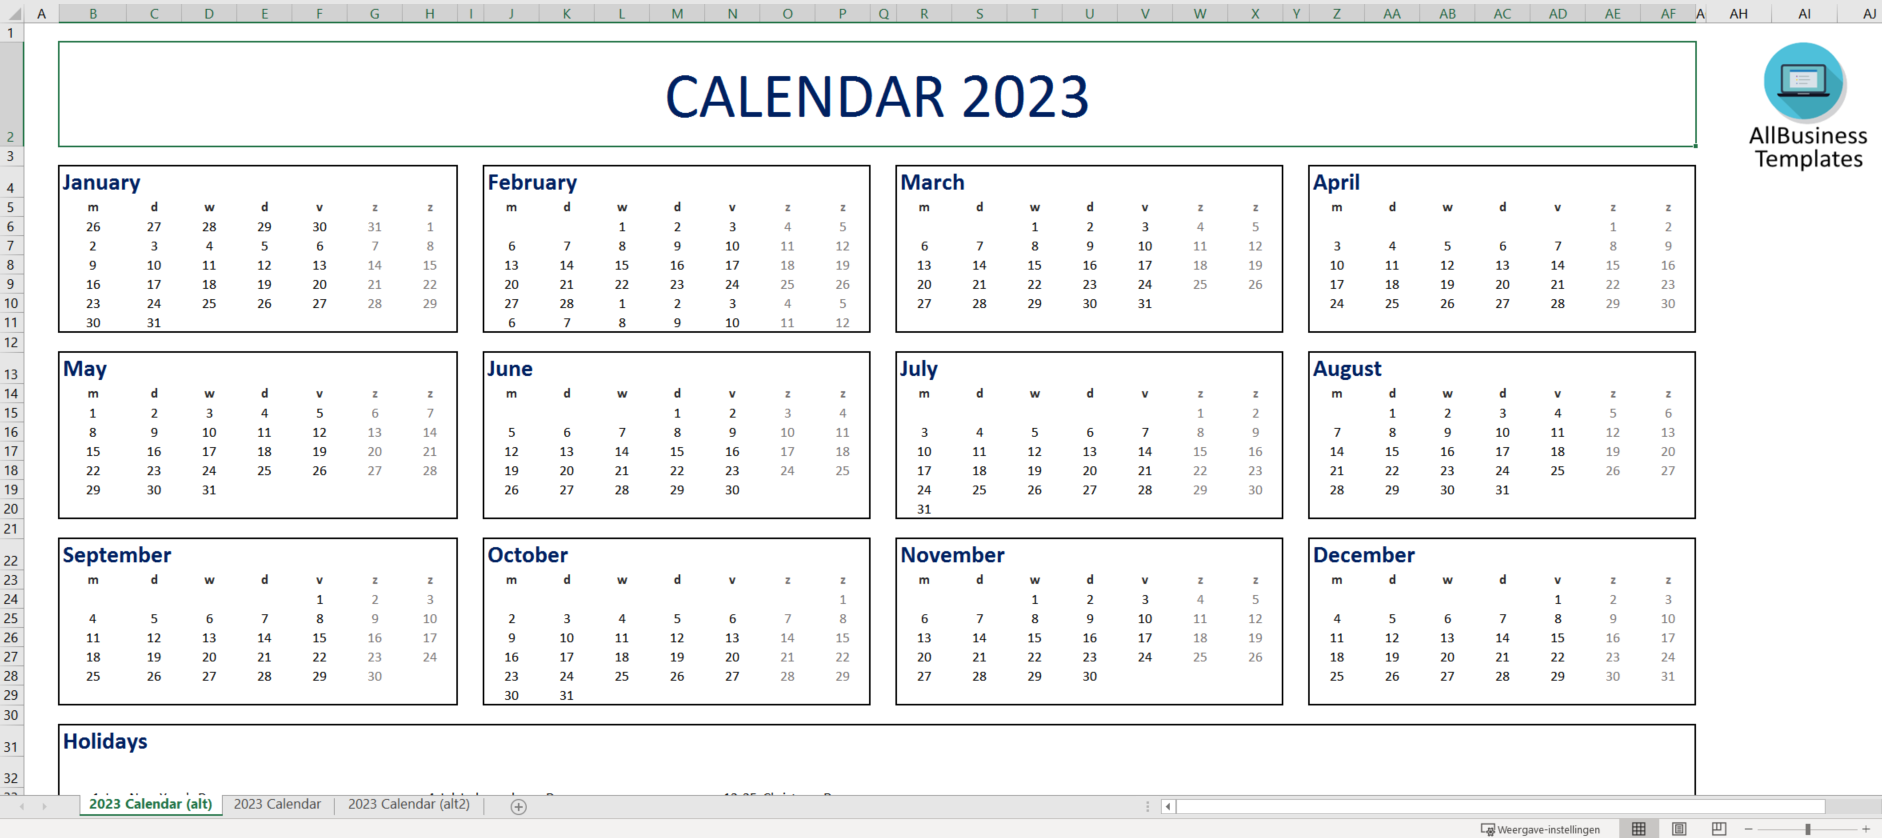 Calendar 2023 Excel main image